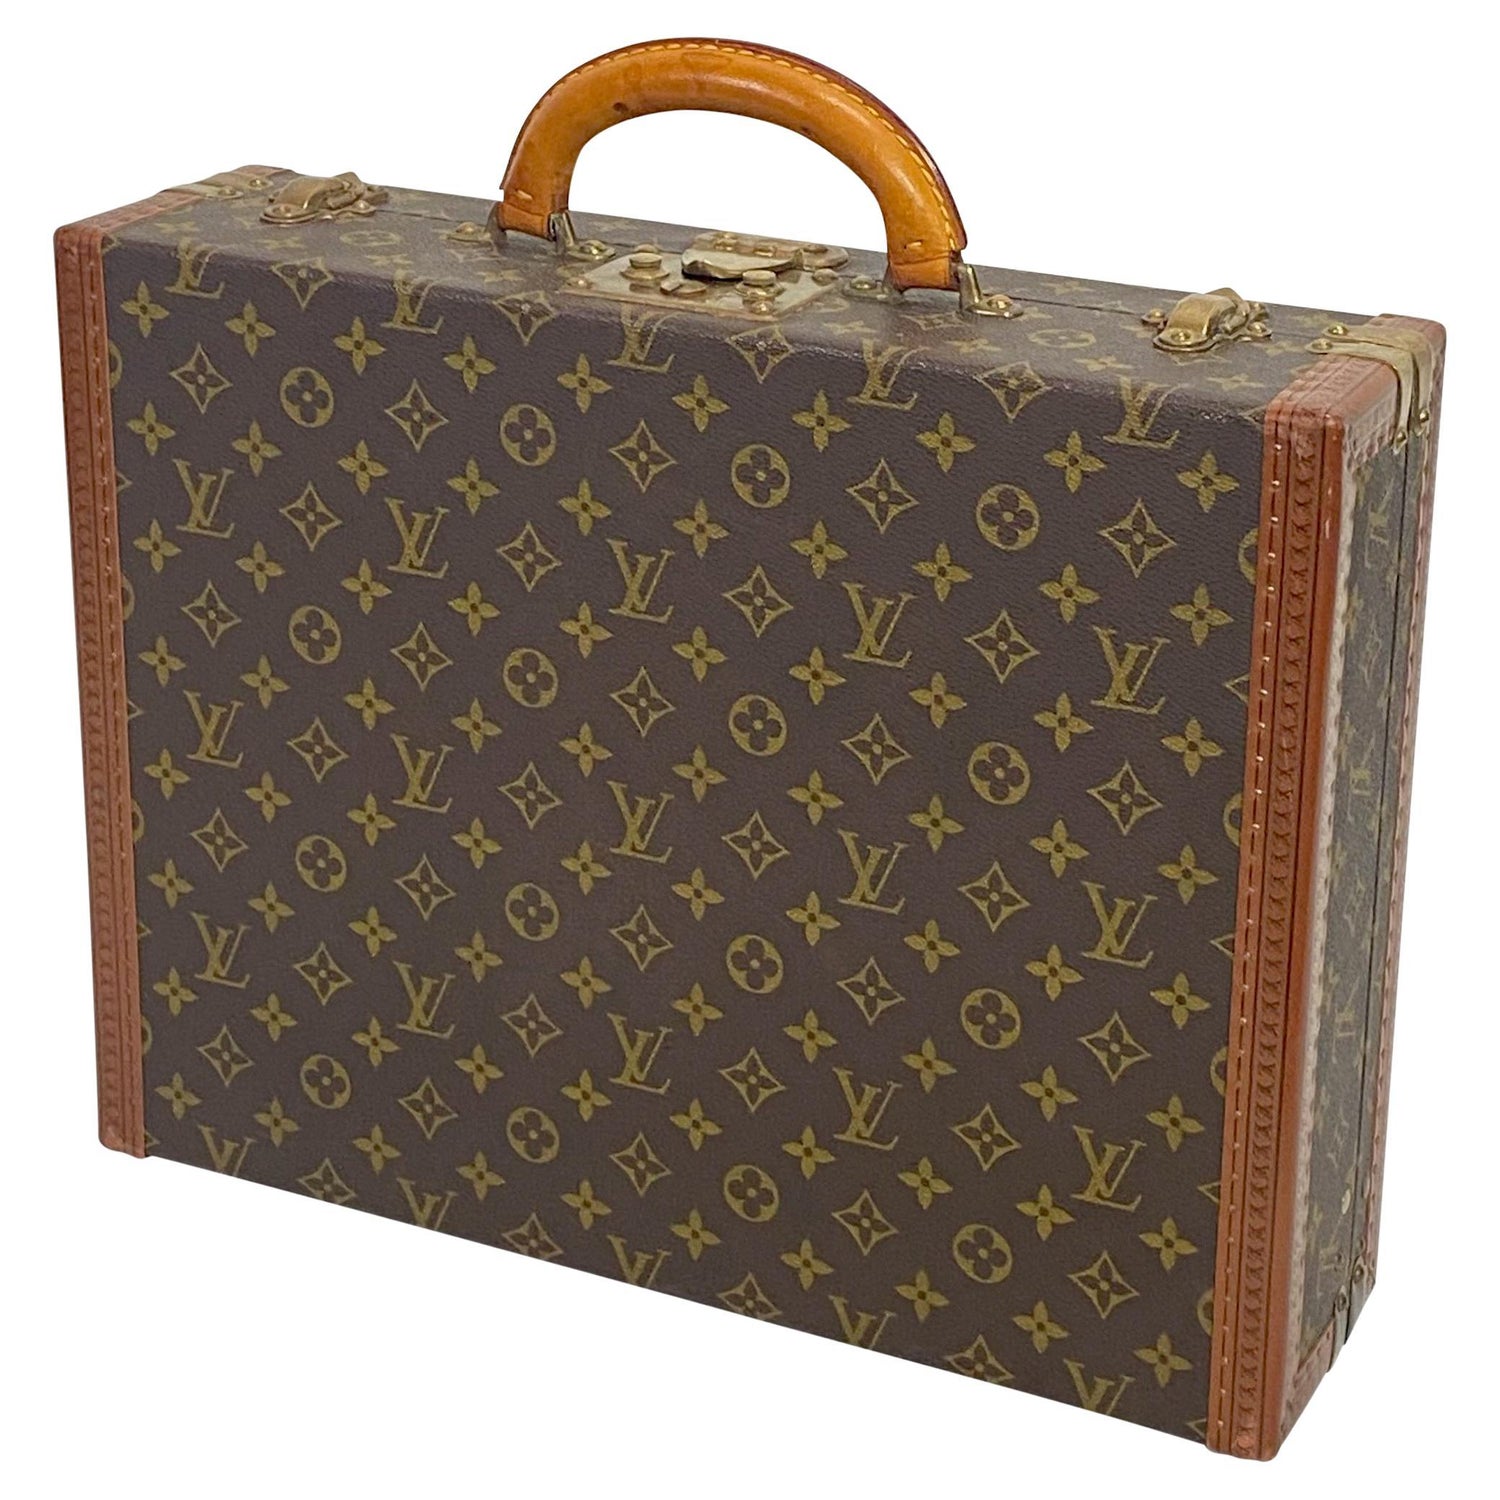 Authentic Louis Vuitton Luggage Pieces - A Pair